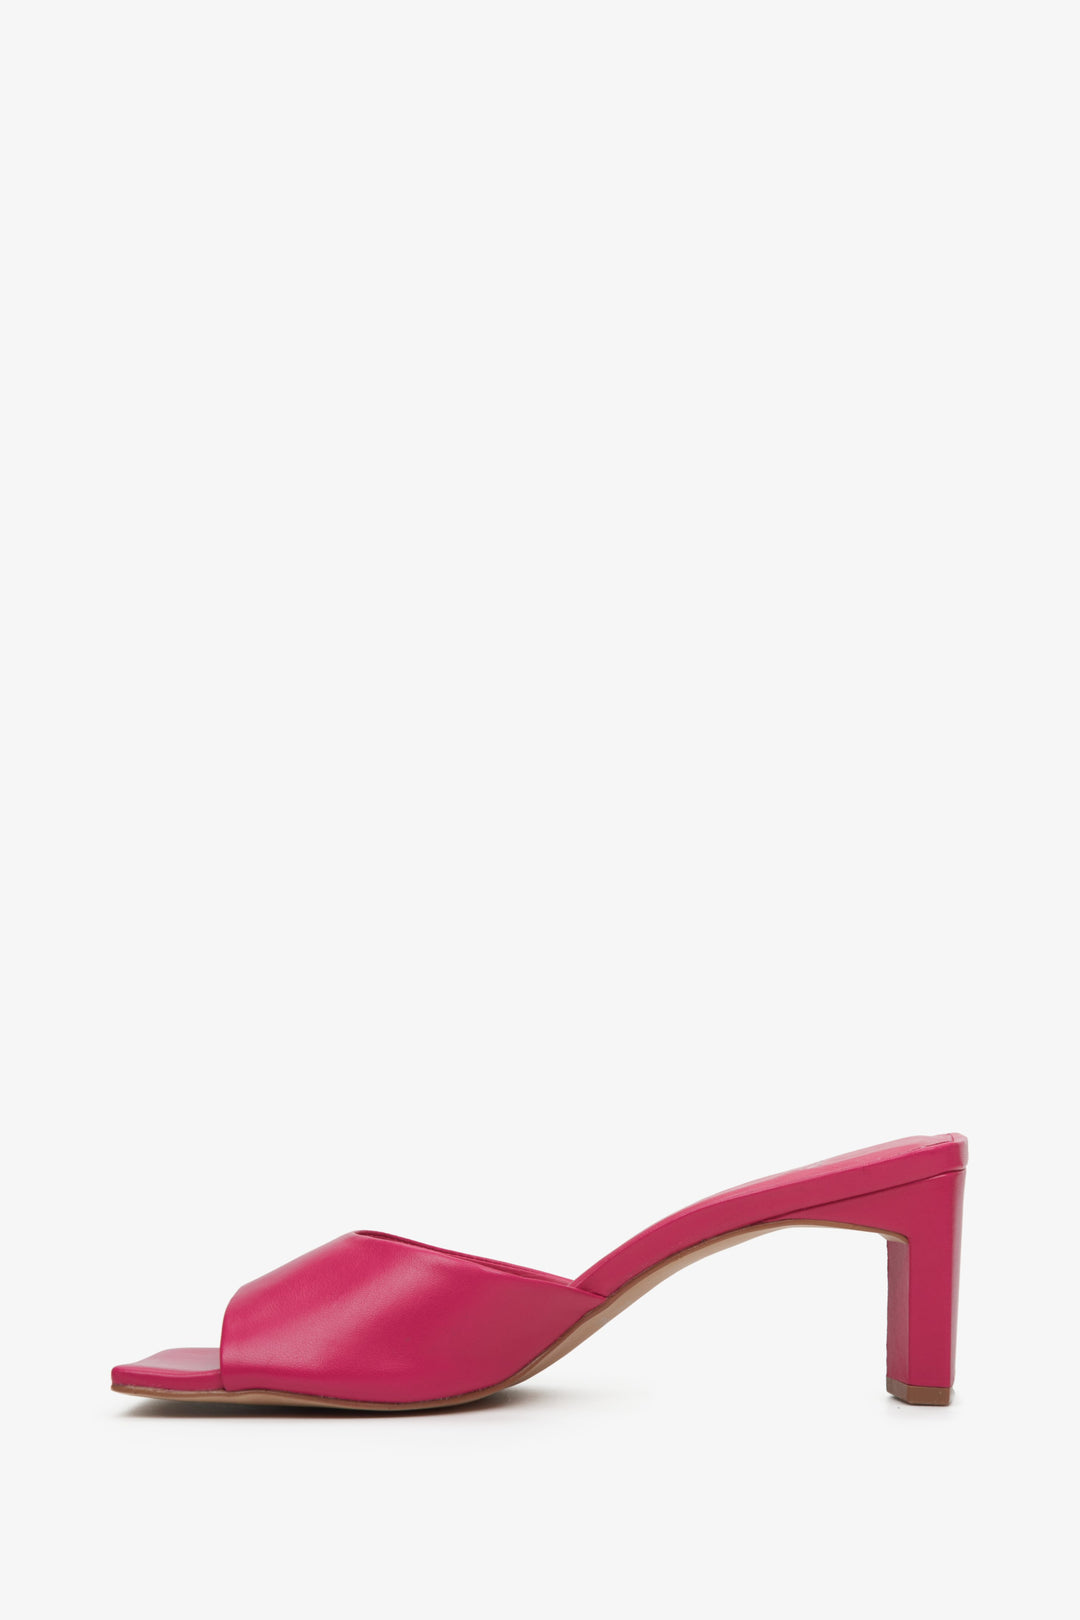 Women's elegant pink mules made of Italian genuine leather by Estro - shoe profile.